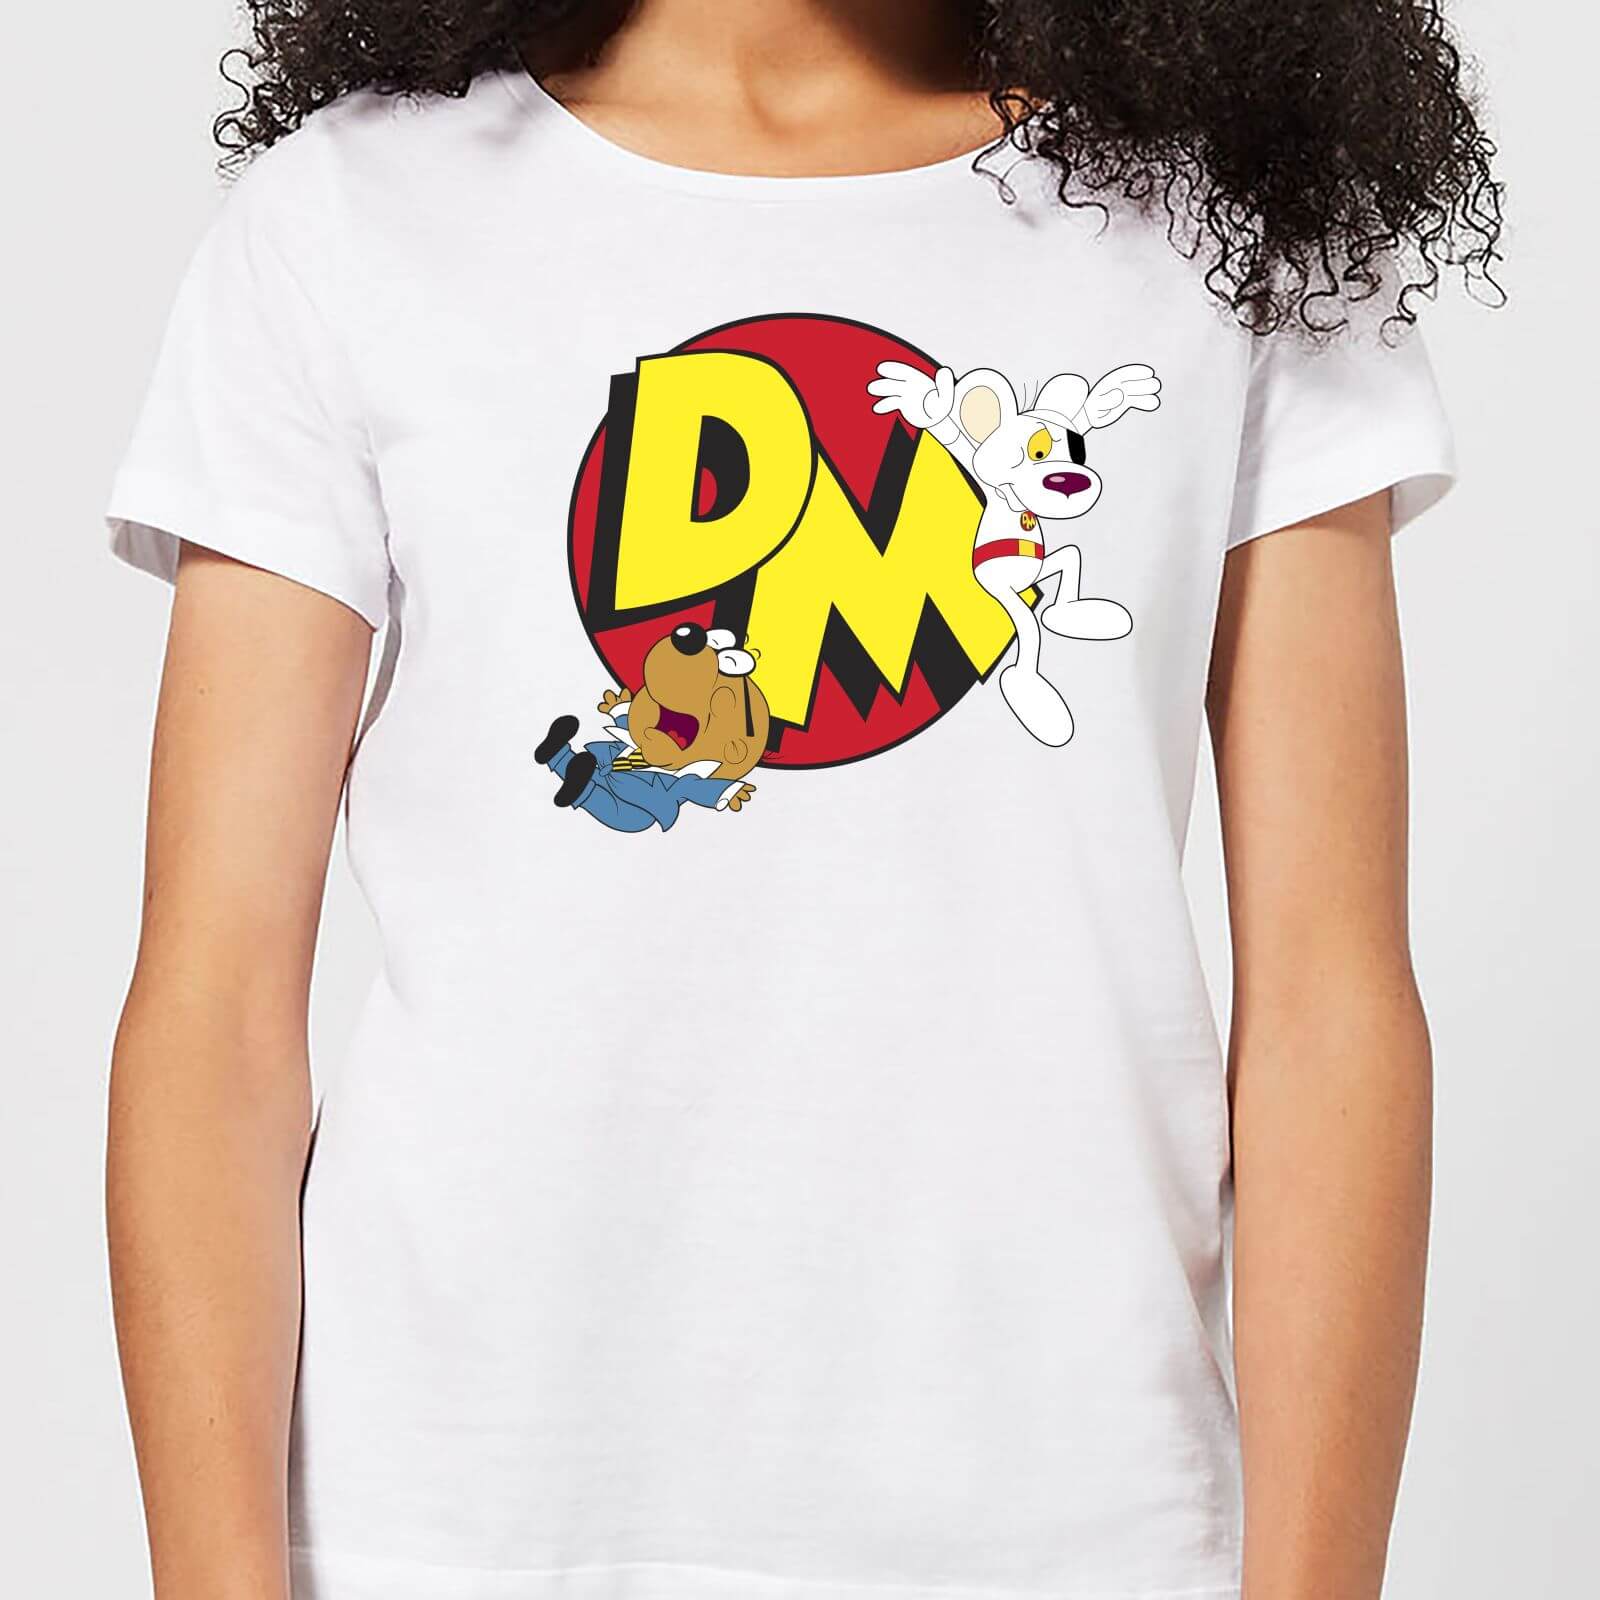 Danger Mouse Run! Women's T-Shirt - White - 4XL - White